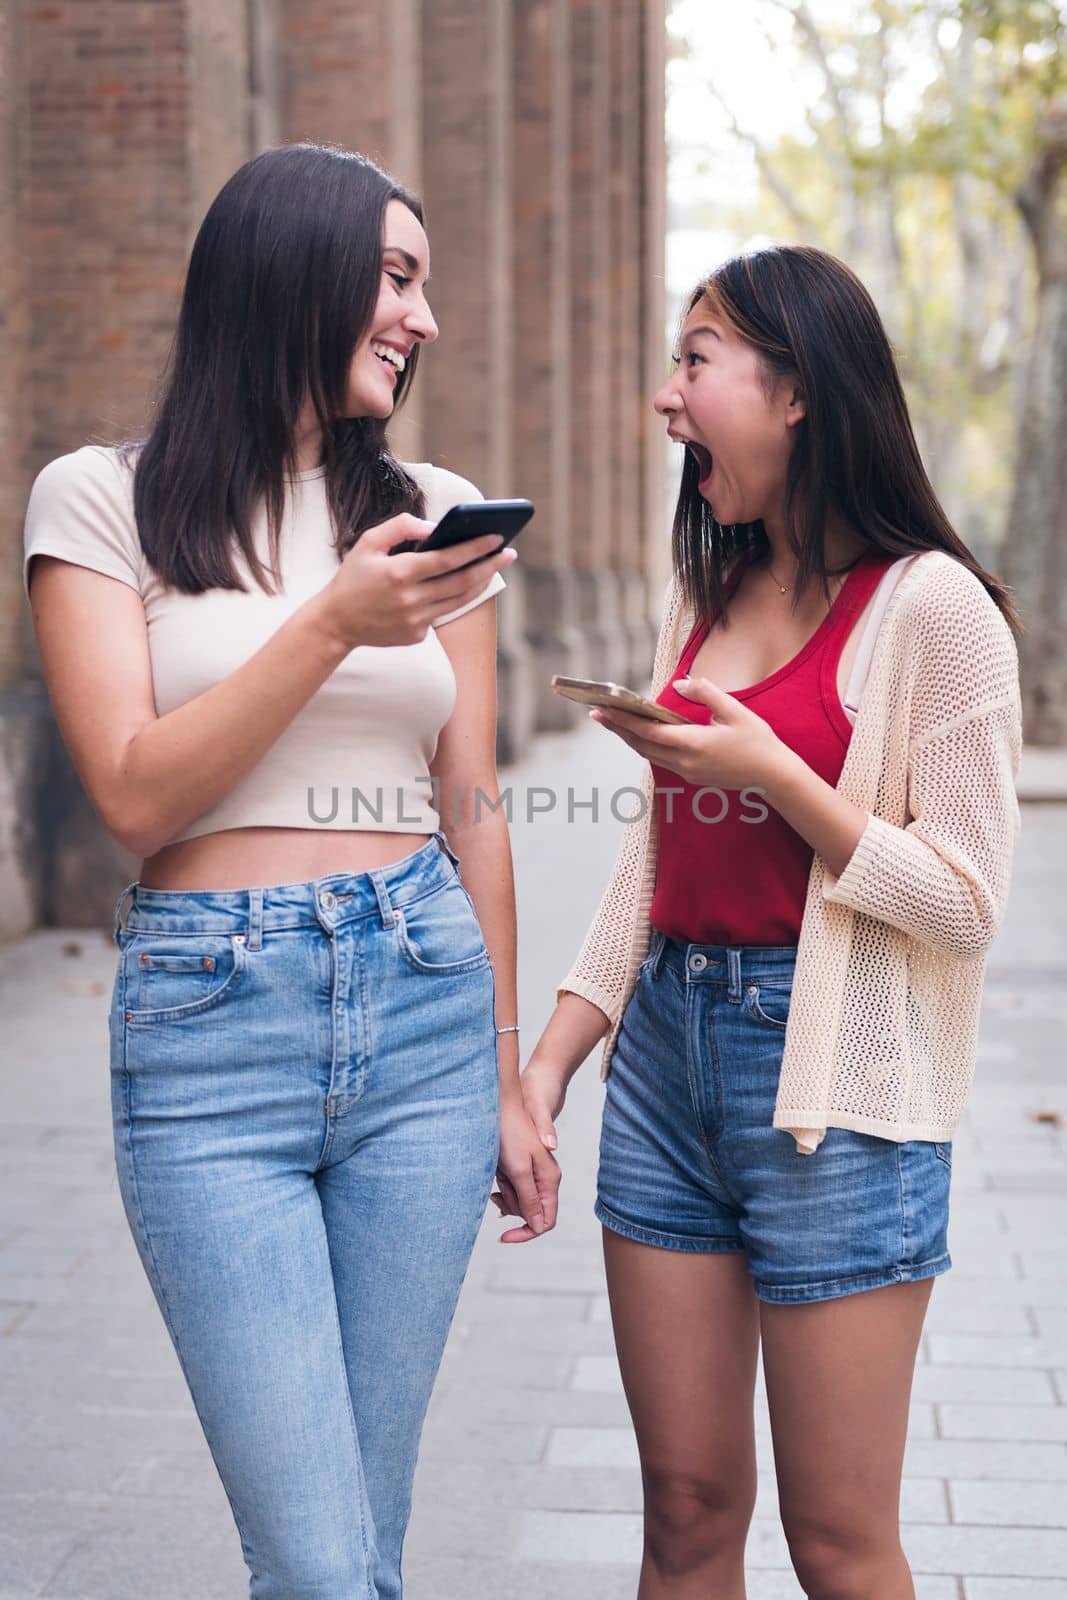 women having fun with their cell phones by raulmelldo